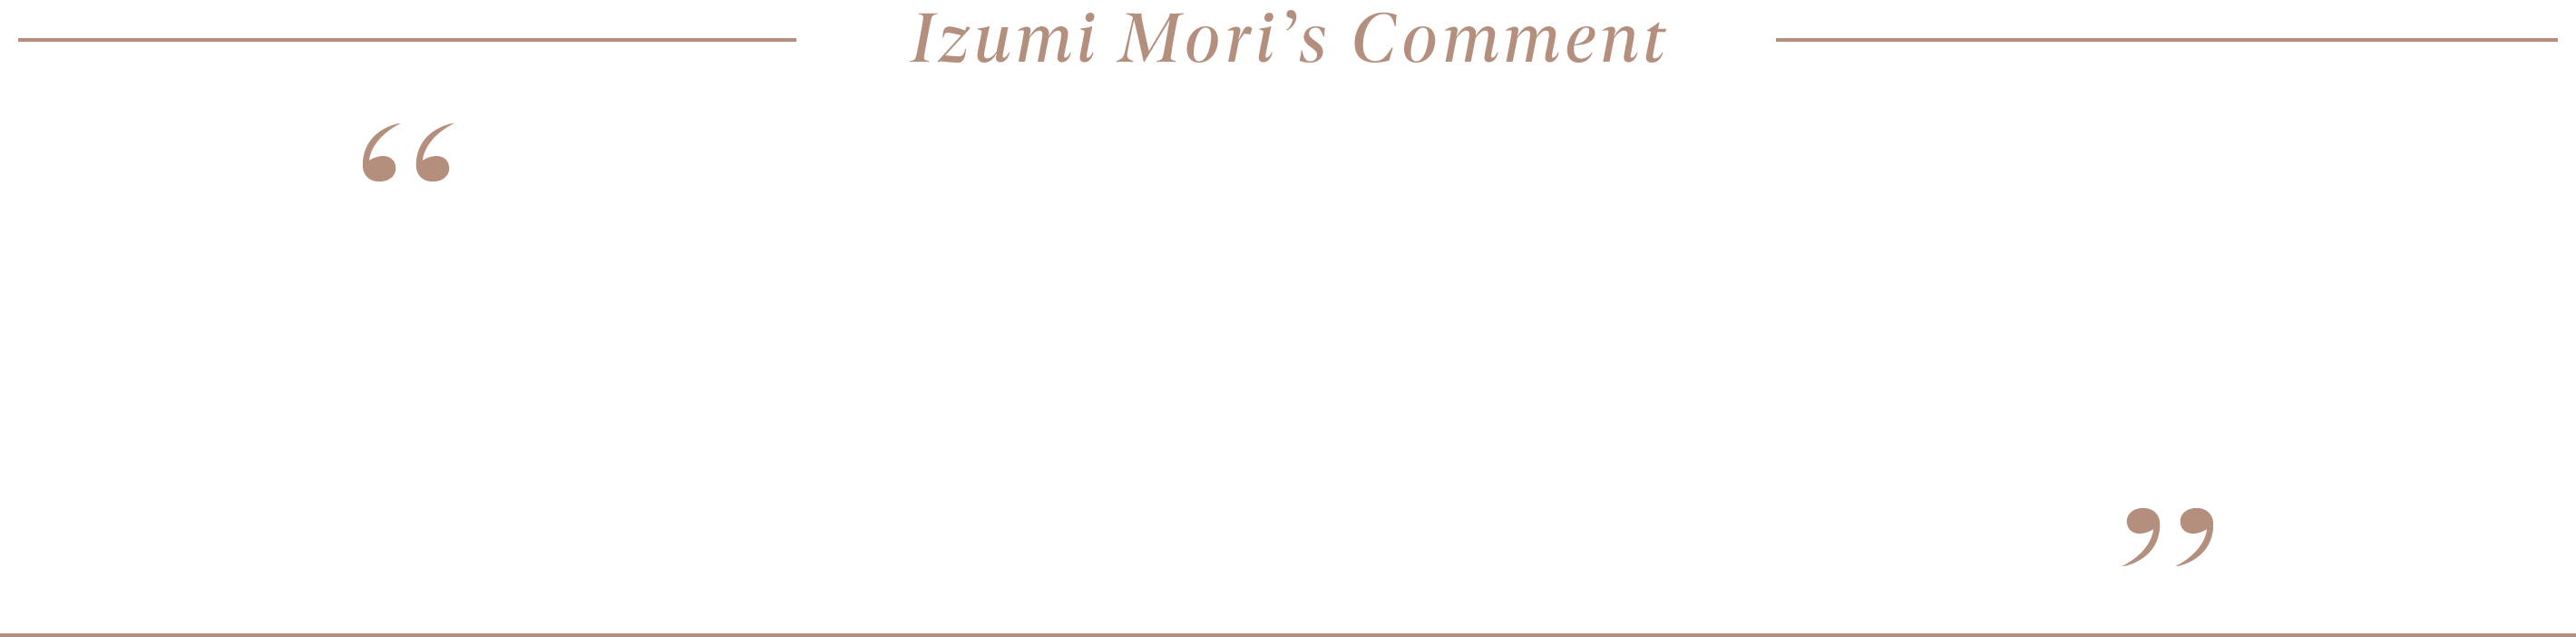 Izumi Mori's Comment